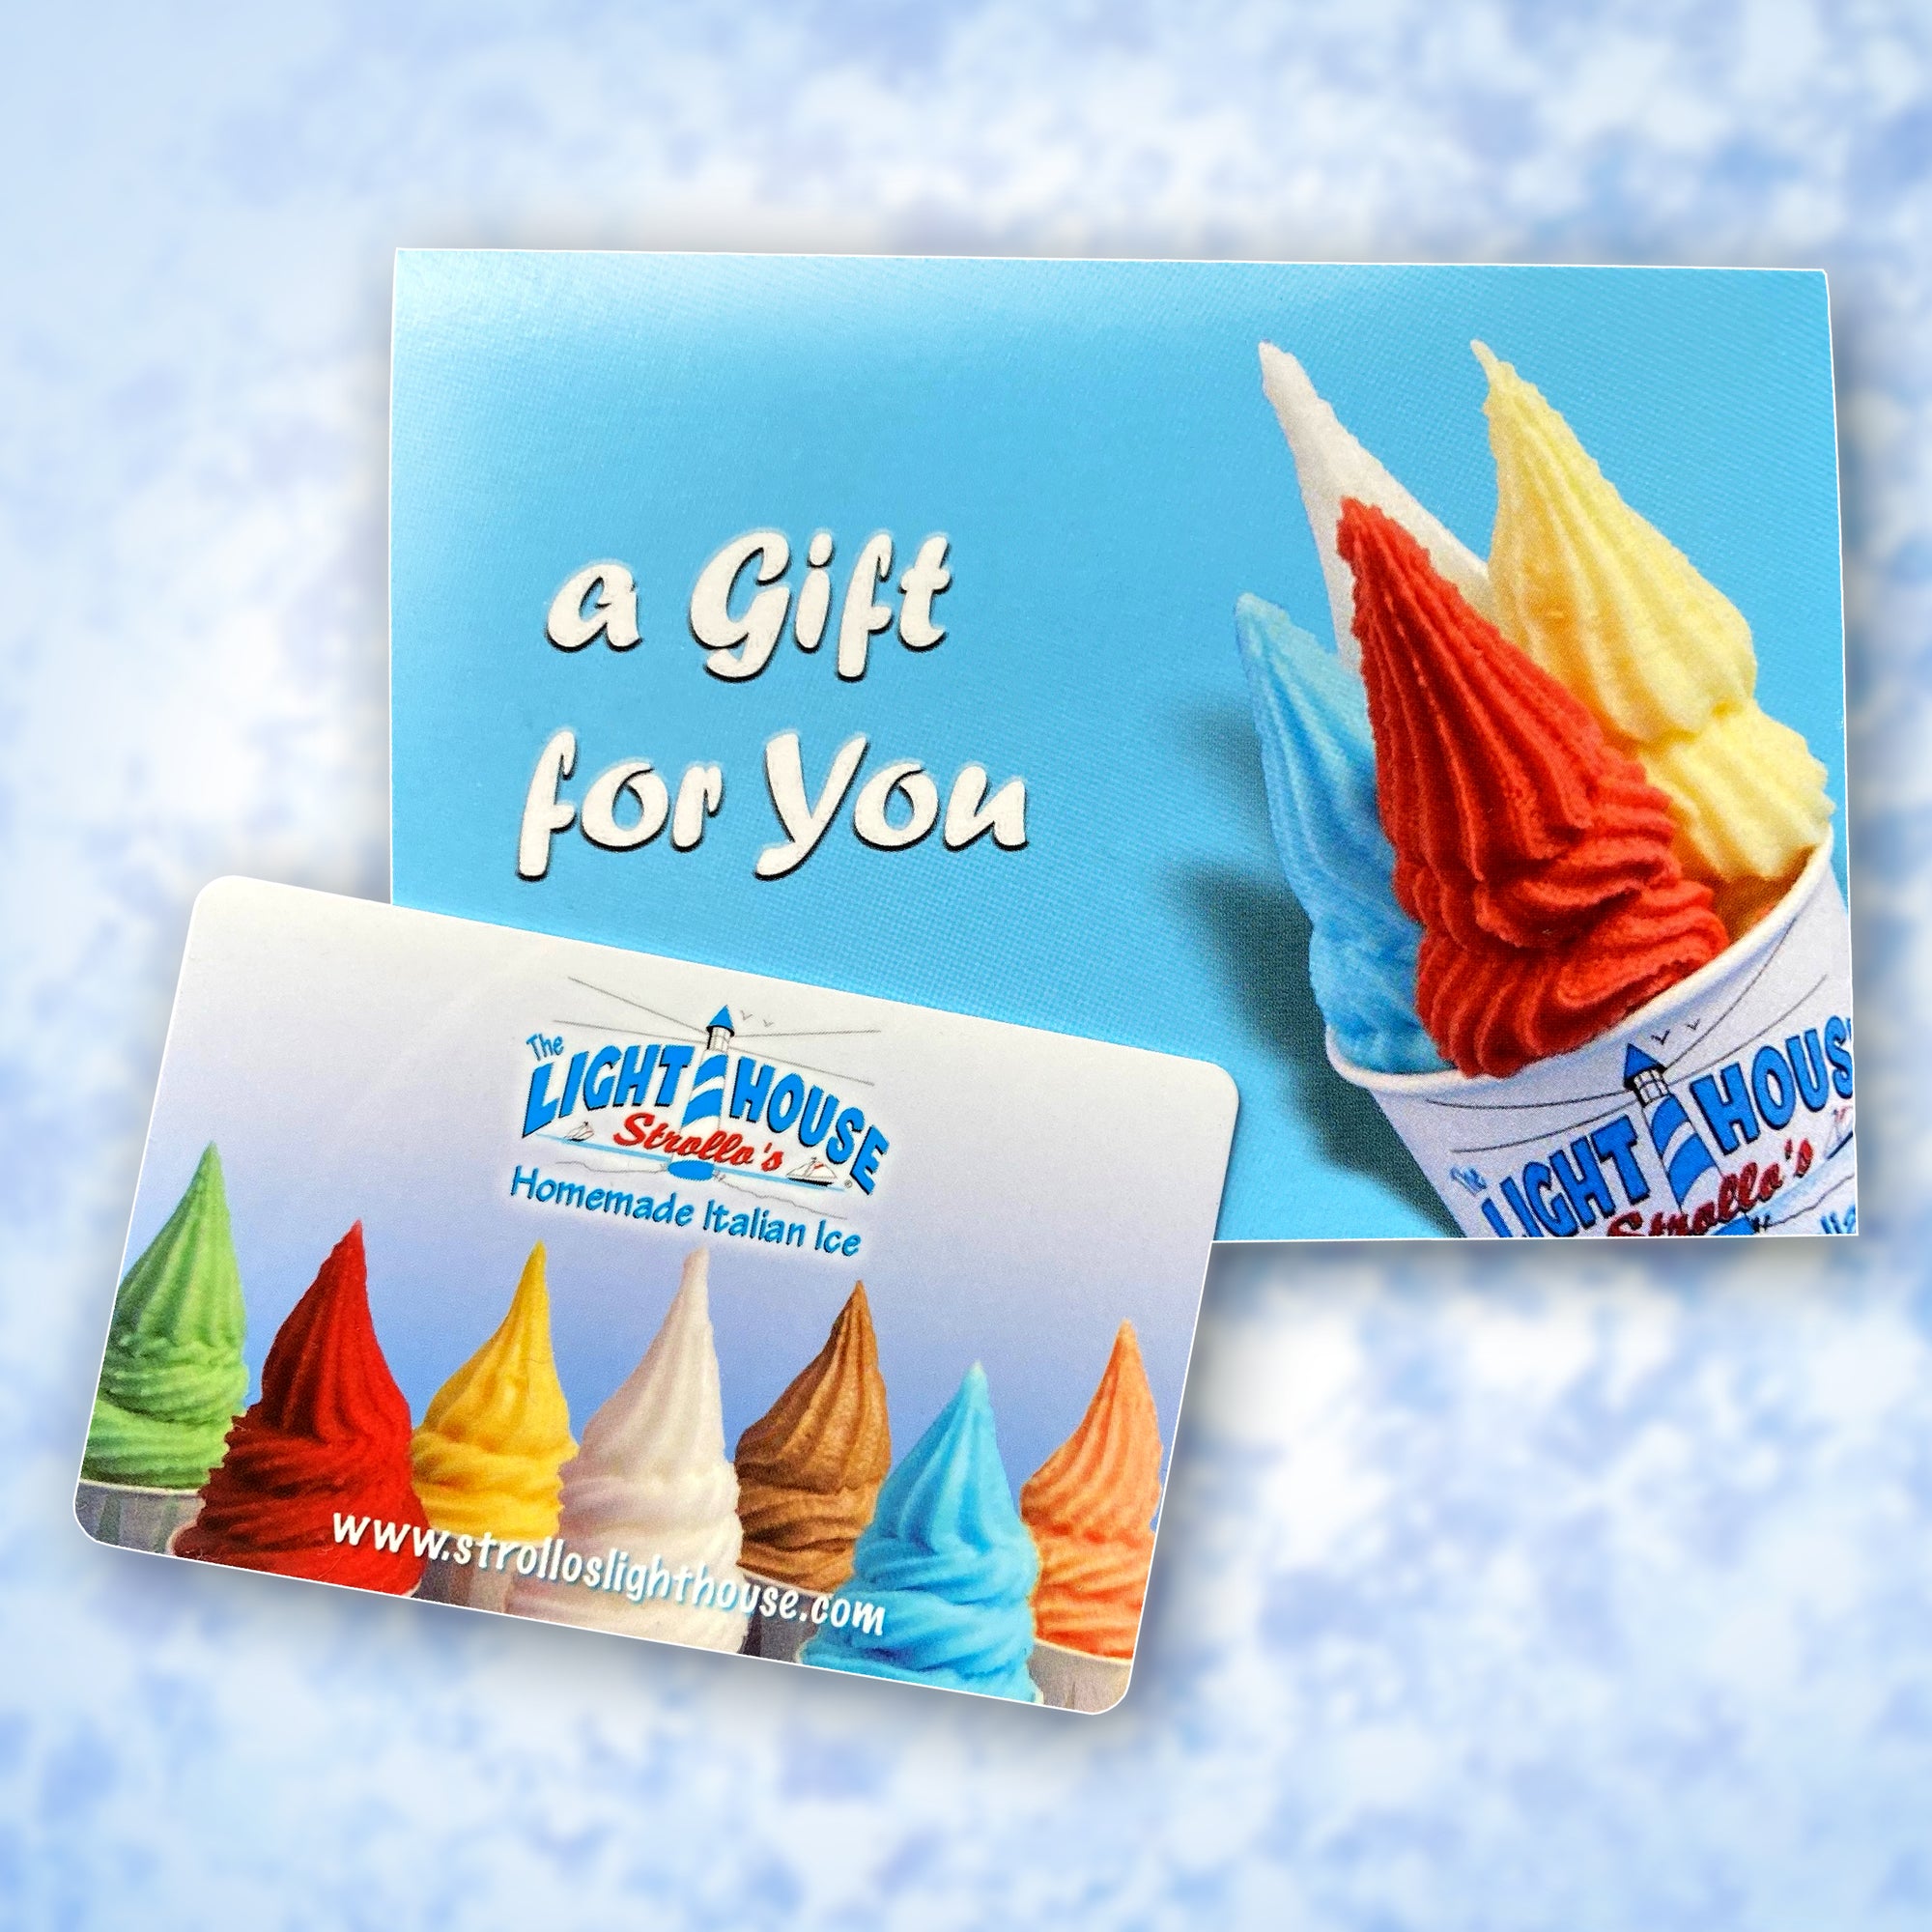 A gift card for Strollo's Lighthouse Homemade Italian Ice